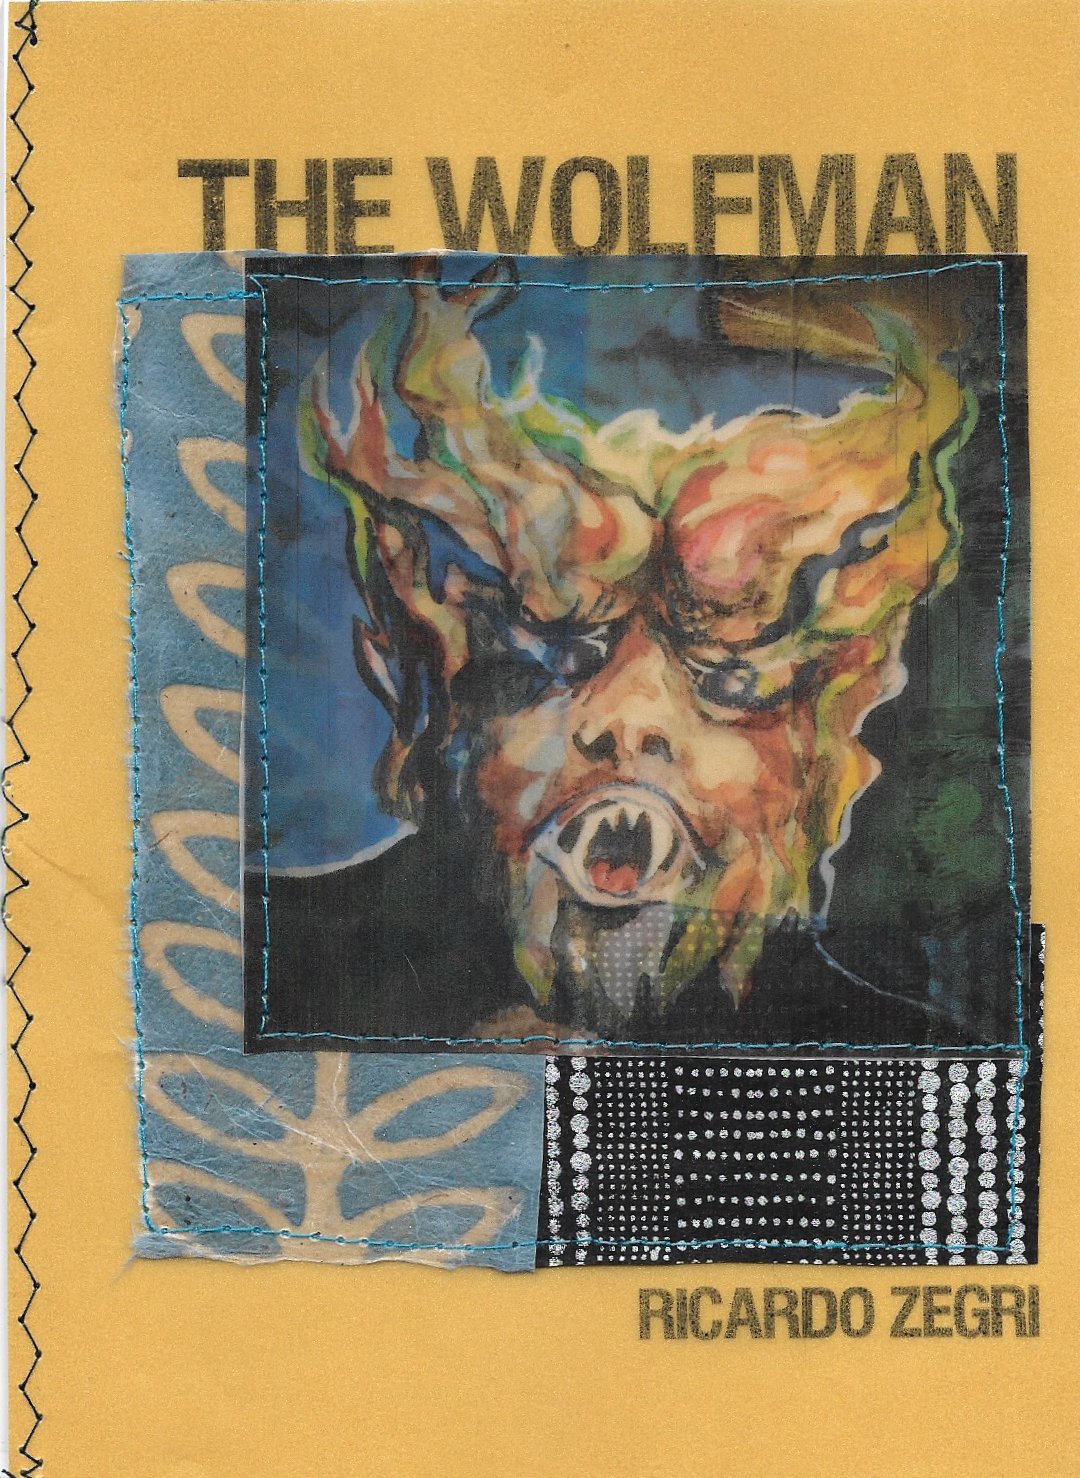 wolfman cover.jpg